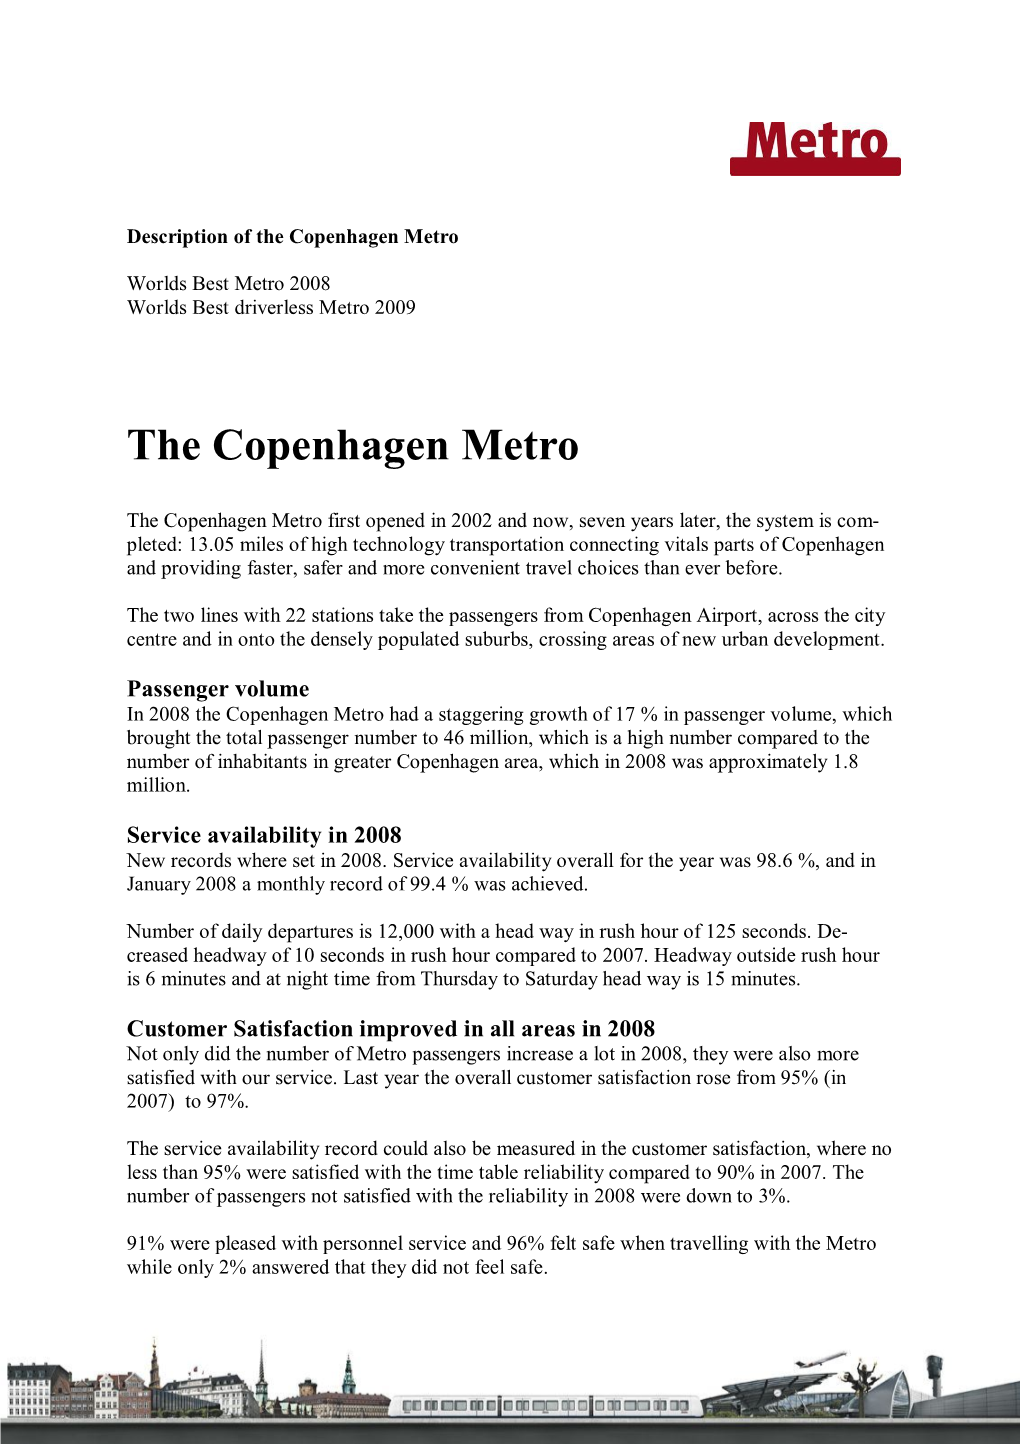 The Copenhagen Metro